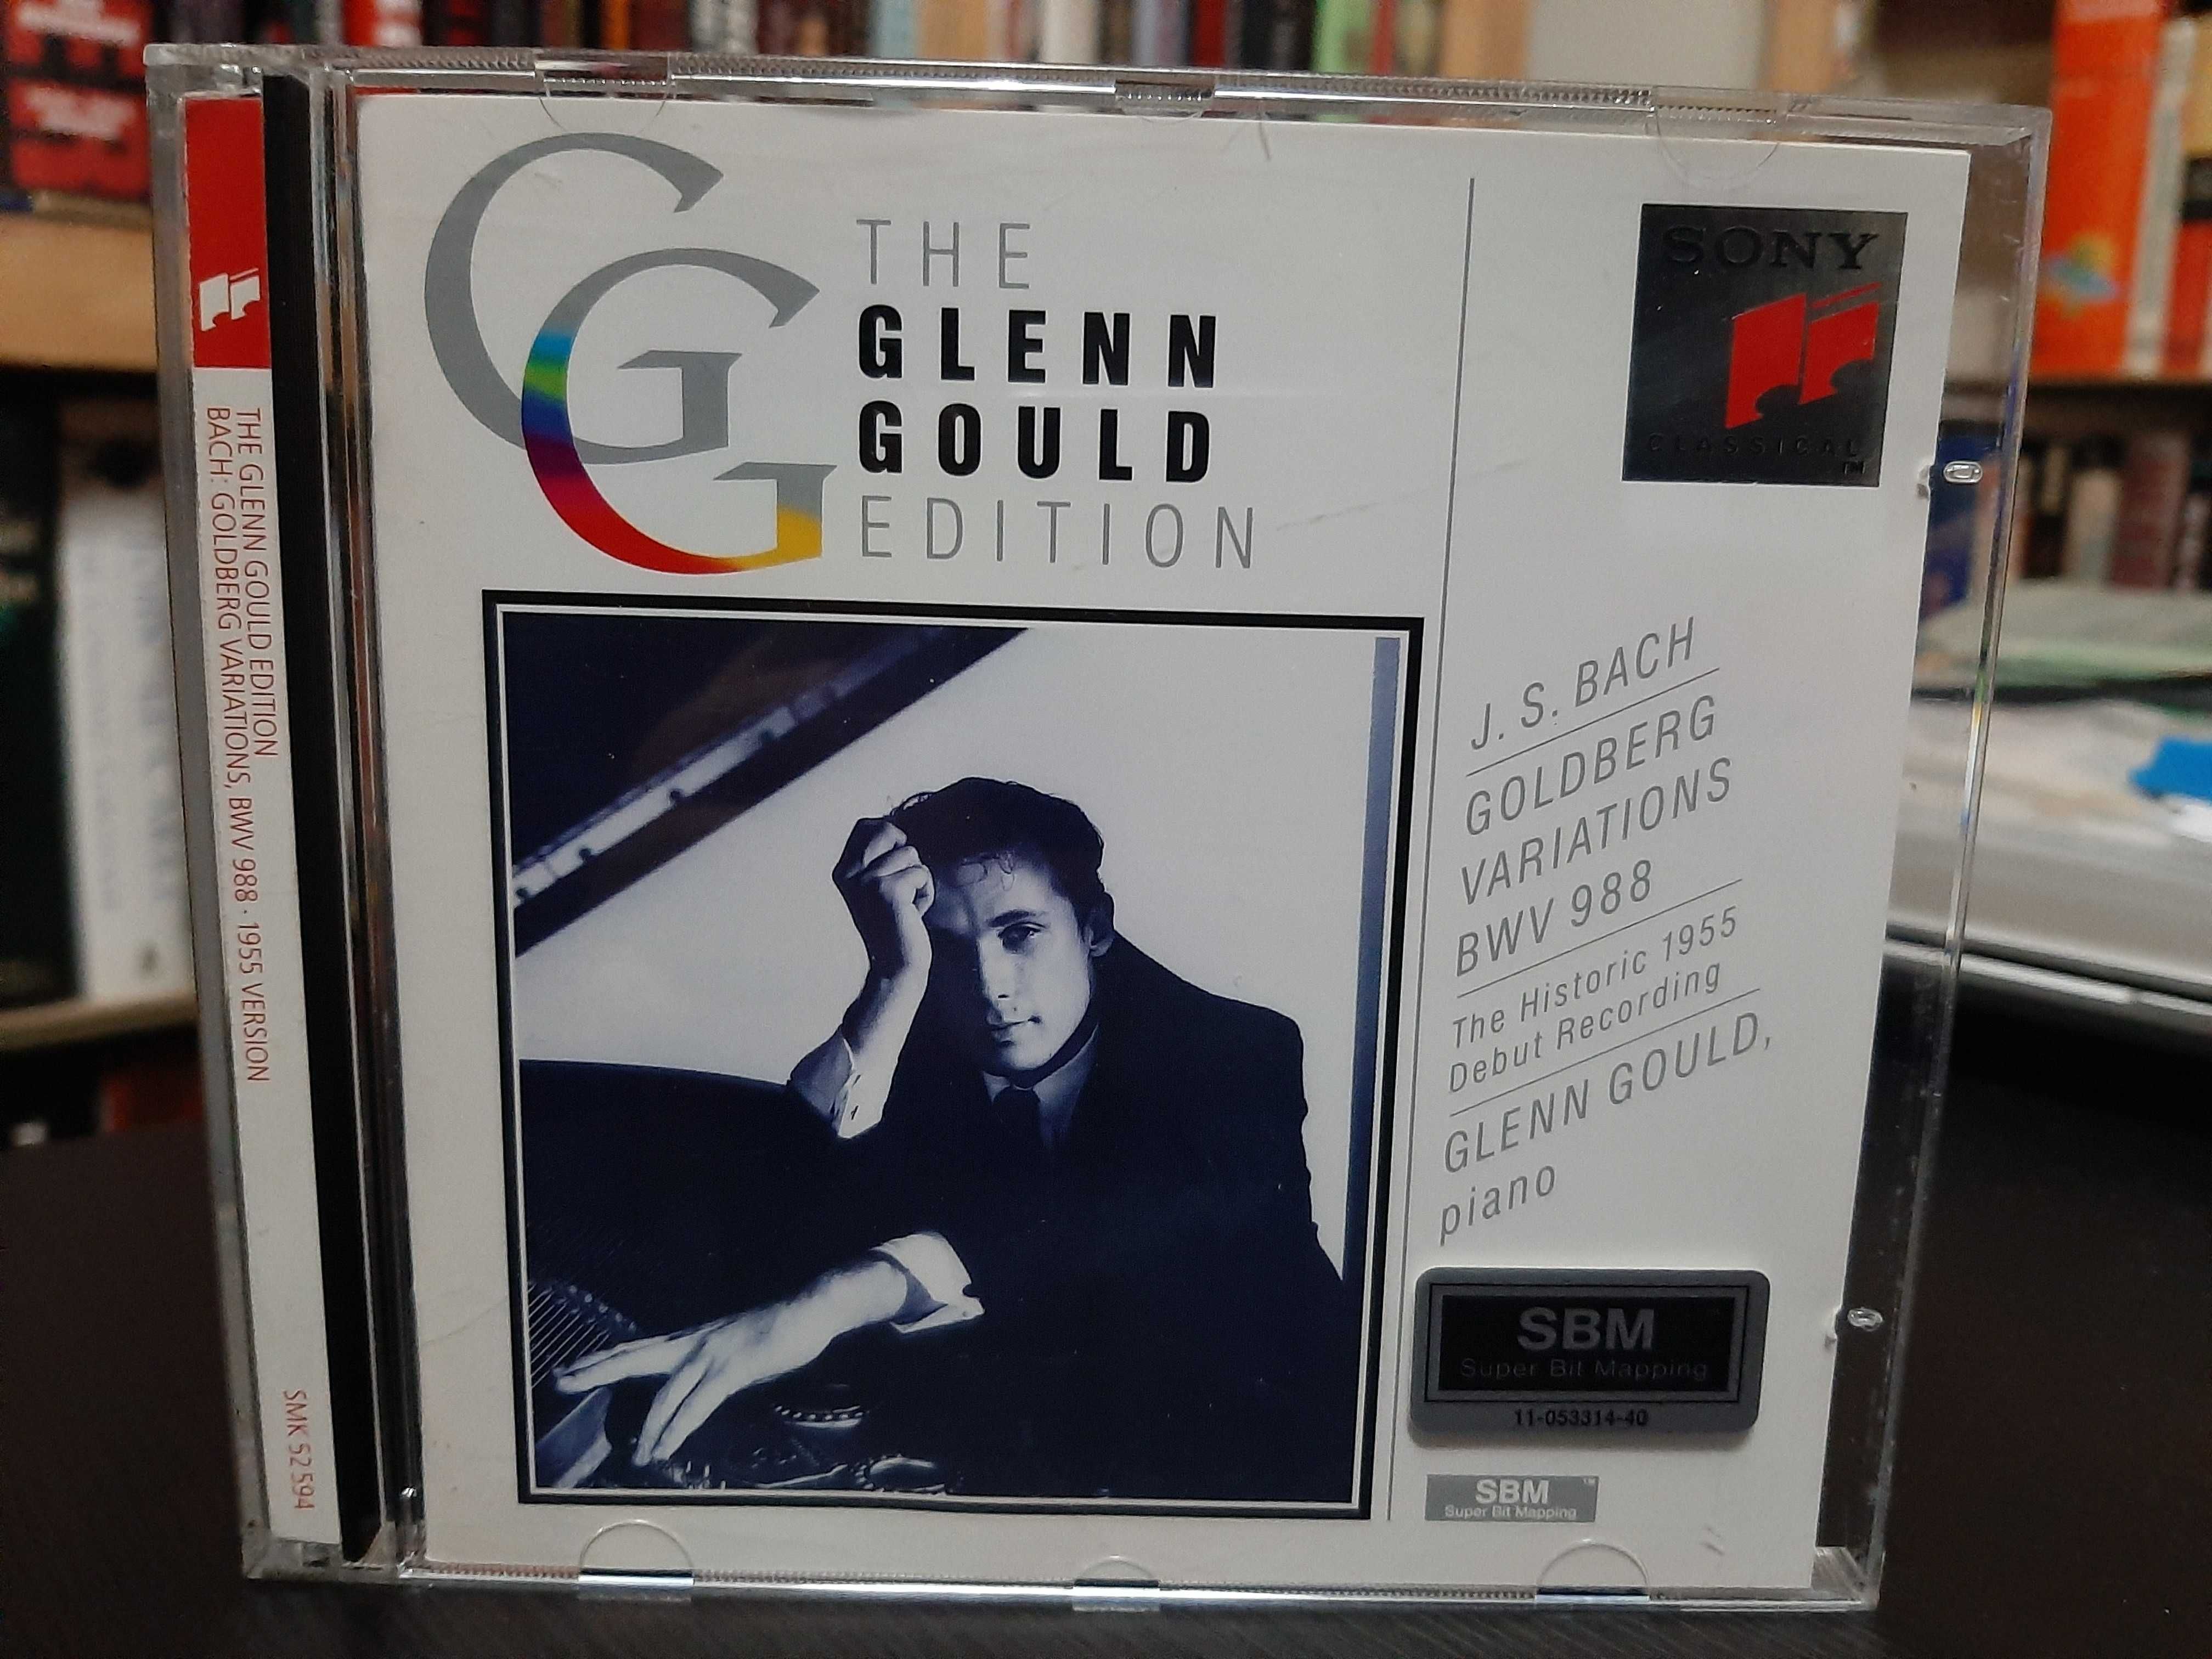 J.S. Bach – Goldberg Variations - 1955 Recording – Glenn Gould